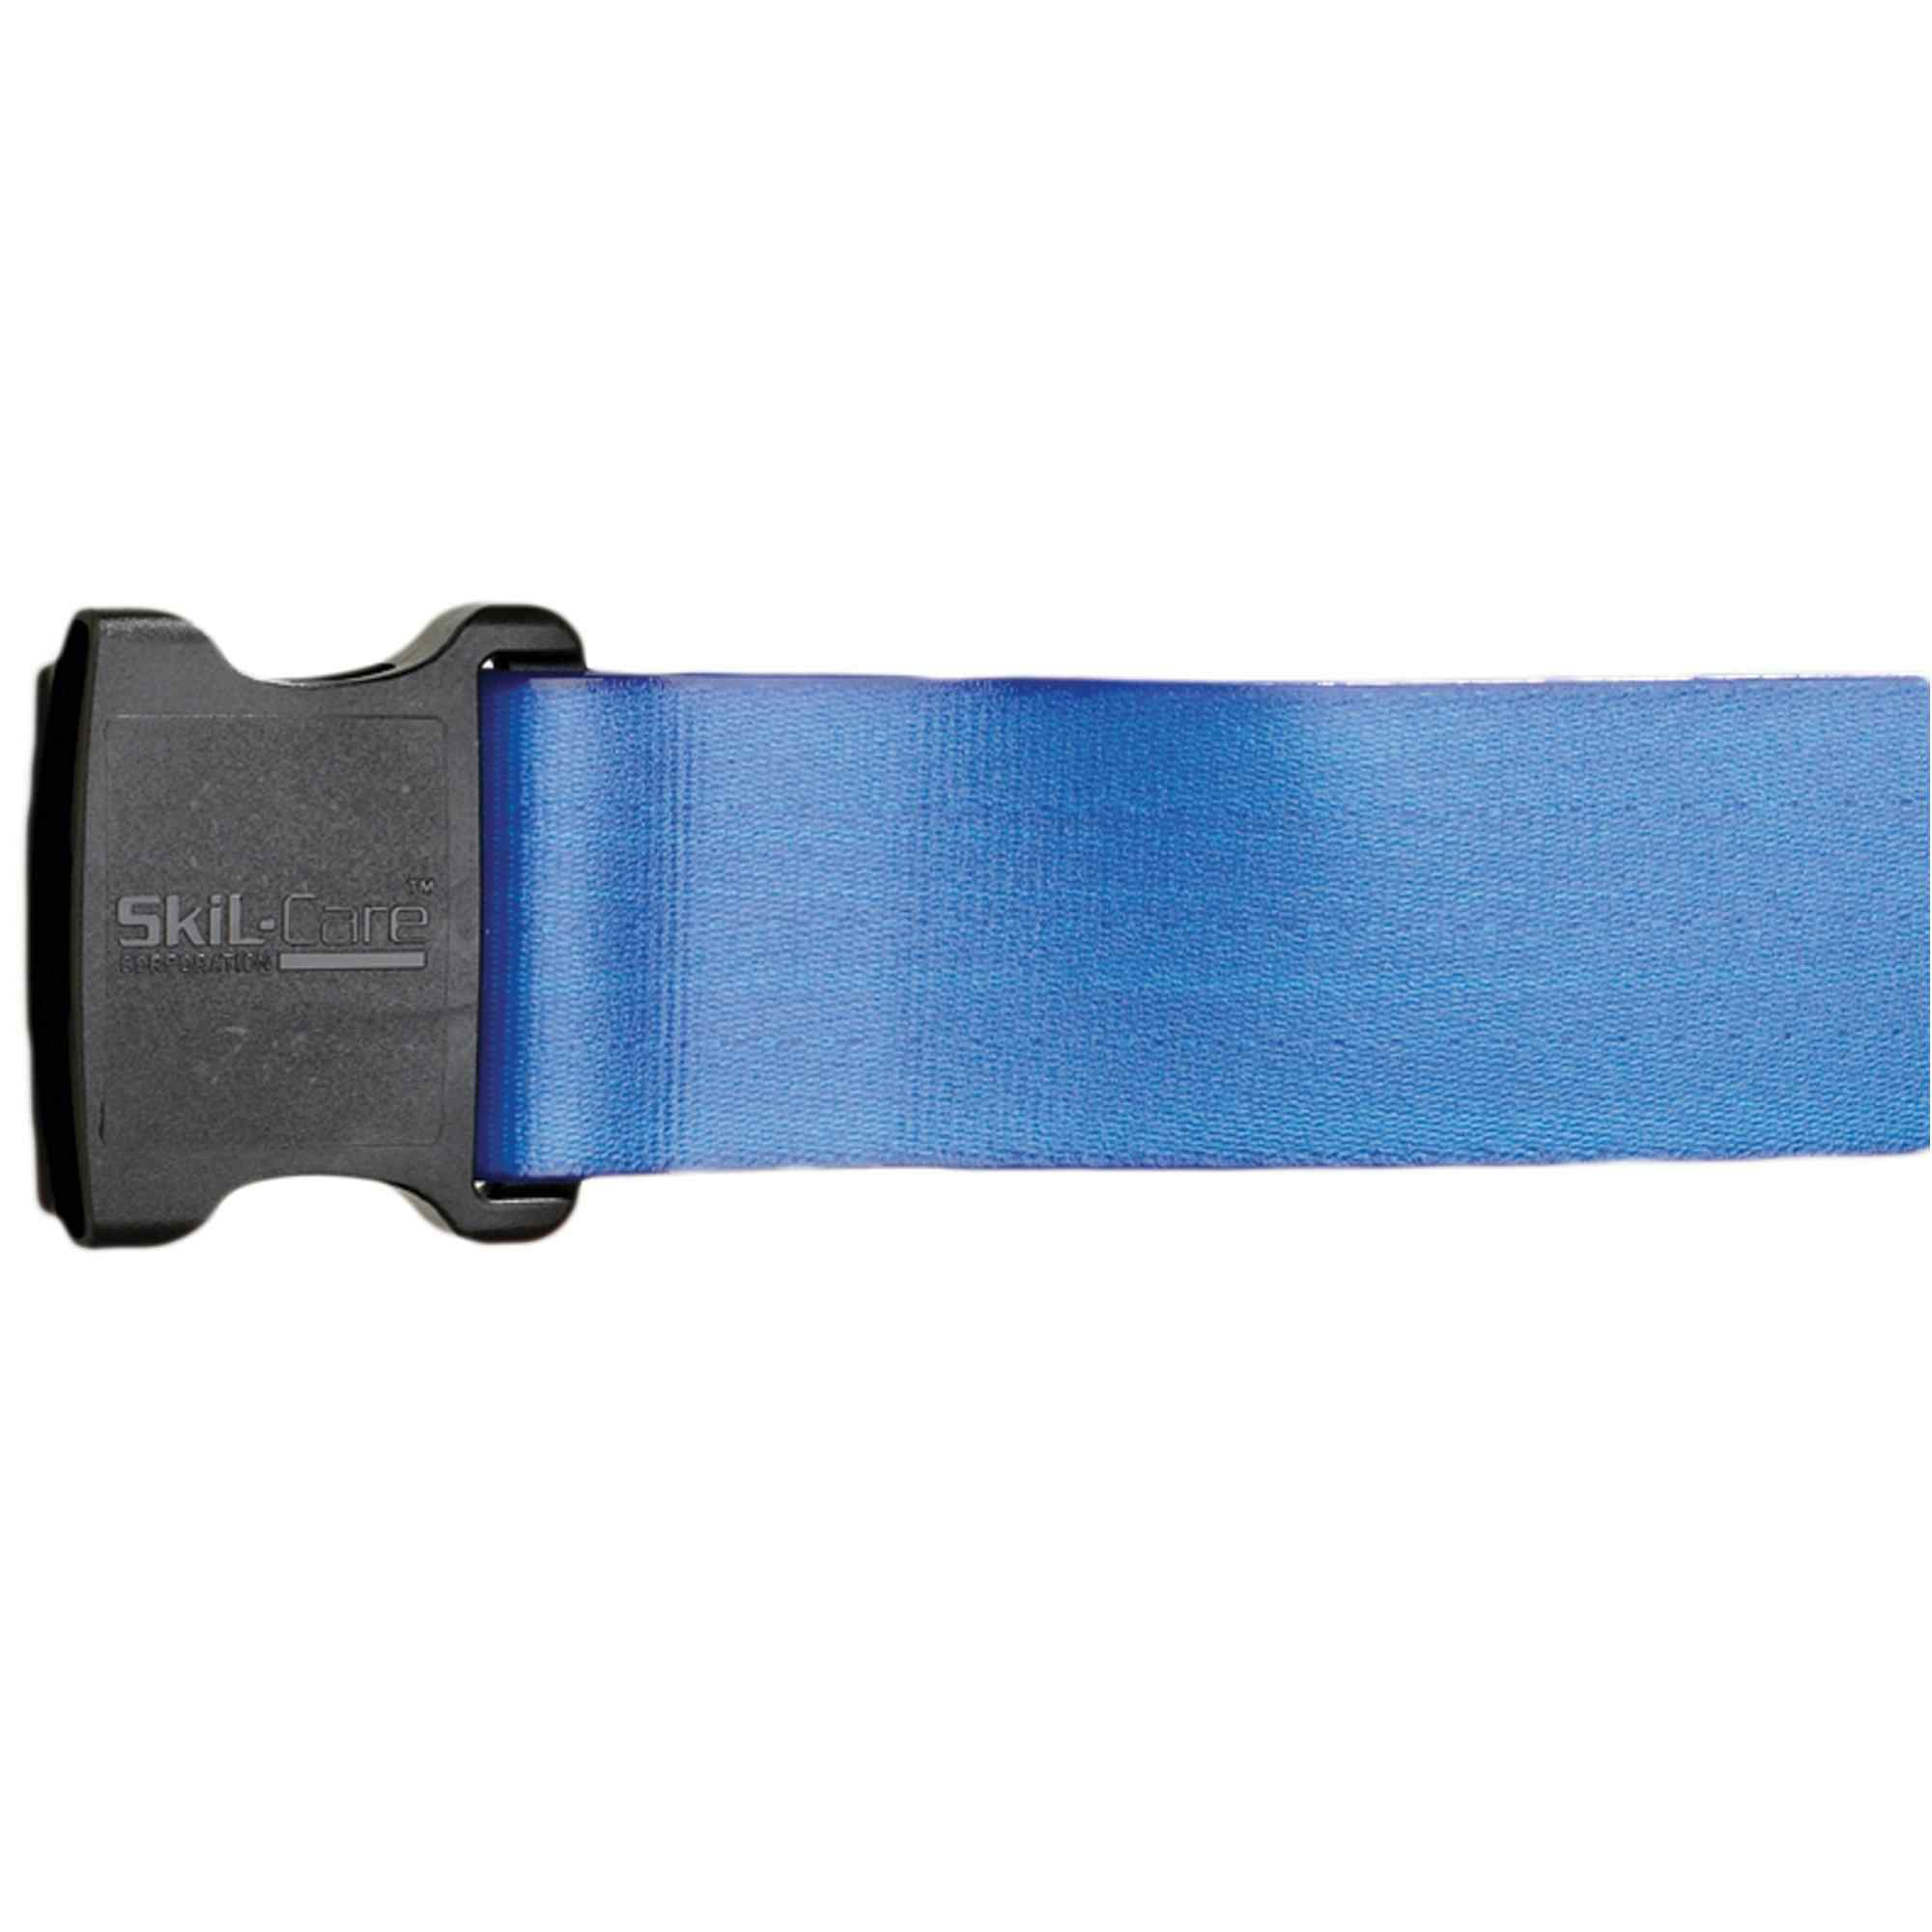 SkiL-Care Vinyl Gait Belt, Multiple Colors, 914380, 60 Inch - Blue